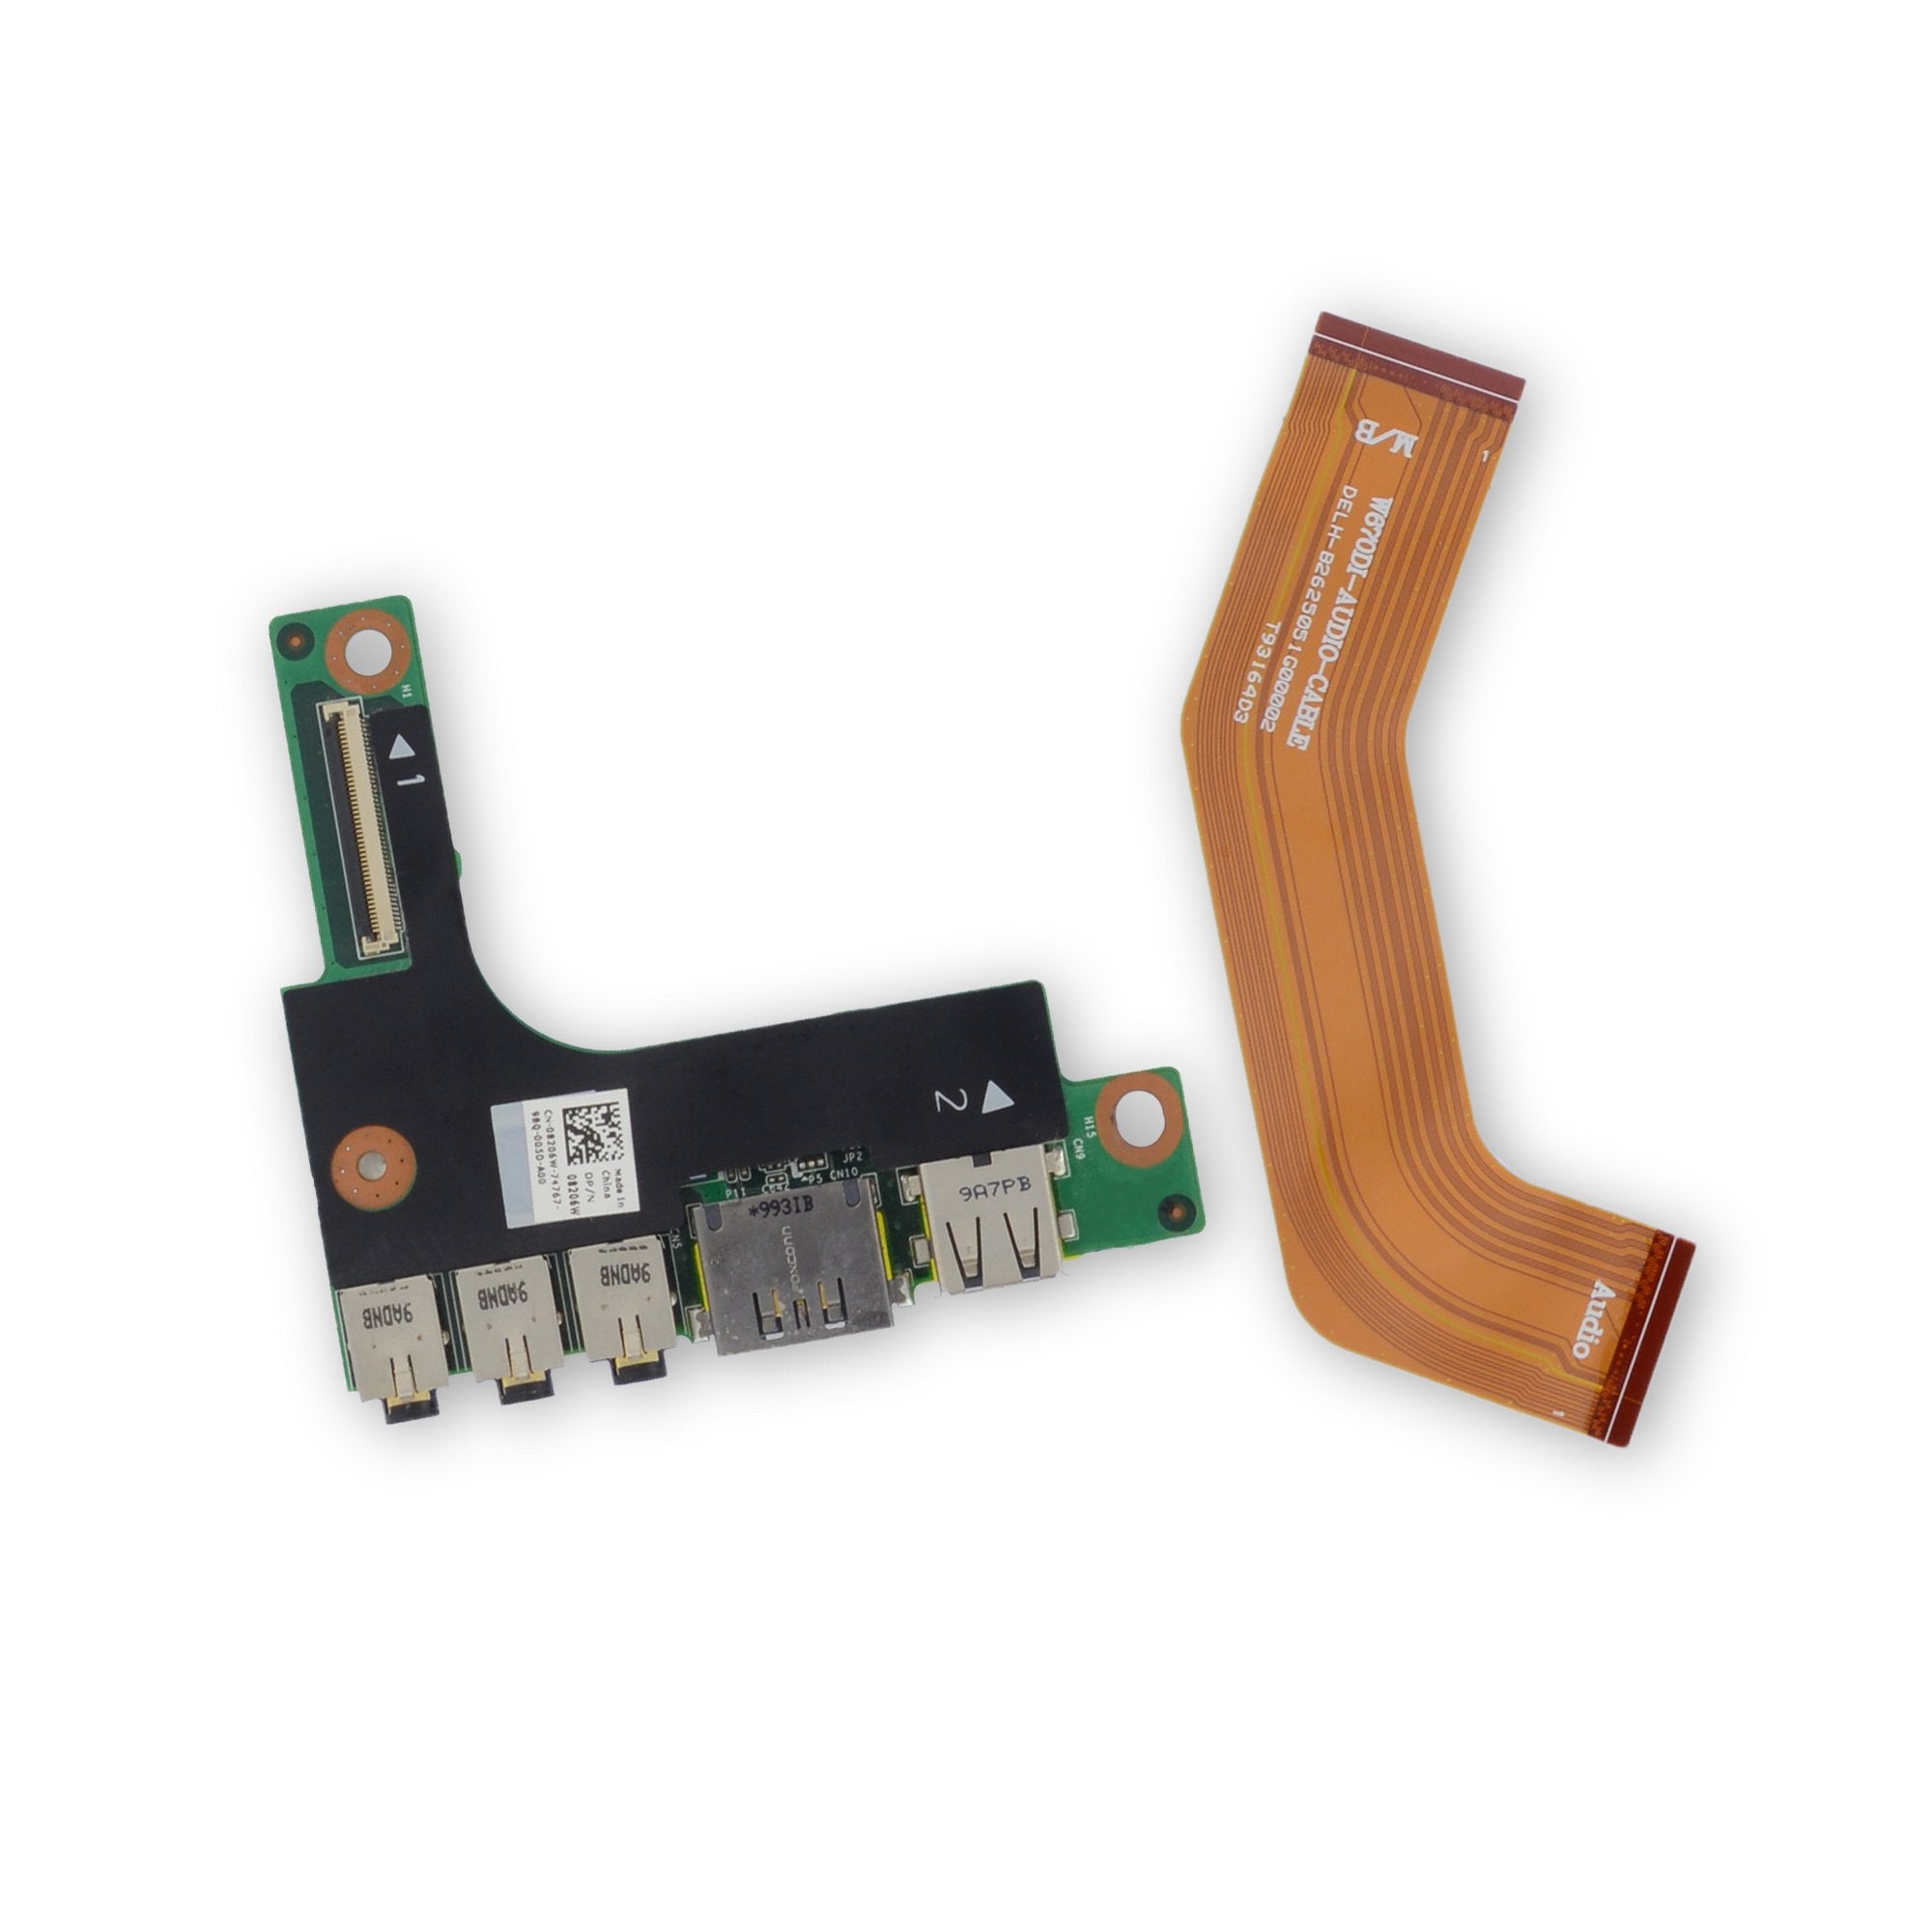 Alienware M15x (P08G) I/O Board and Cable